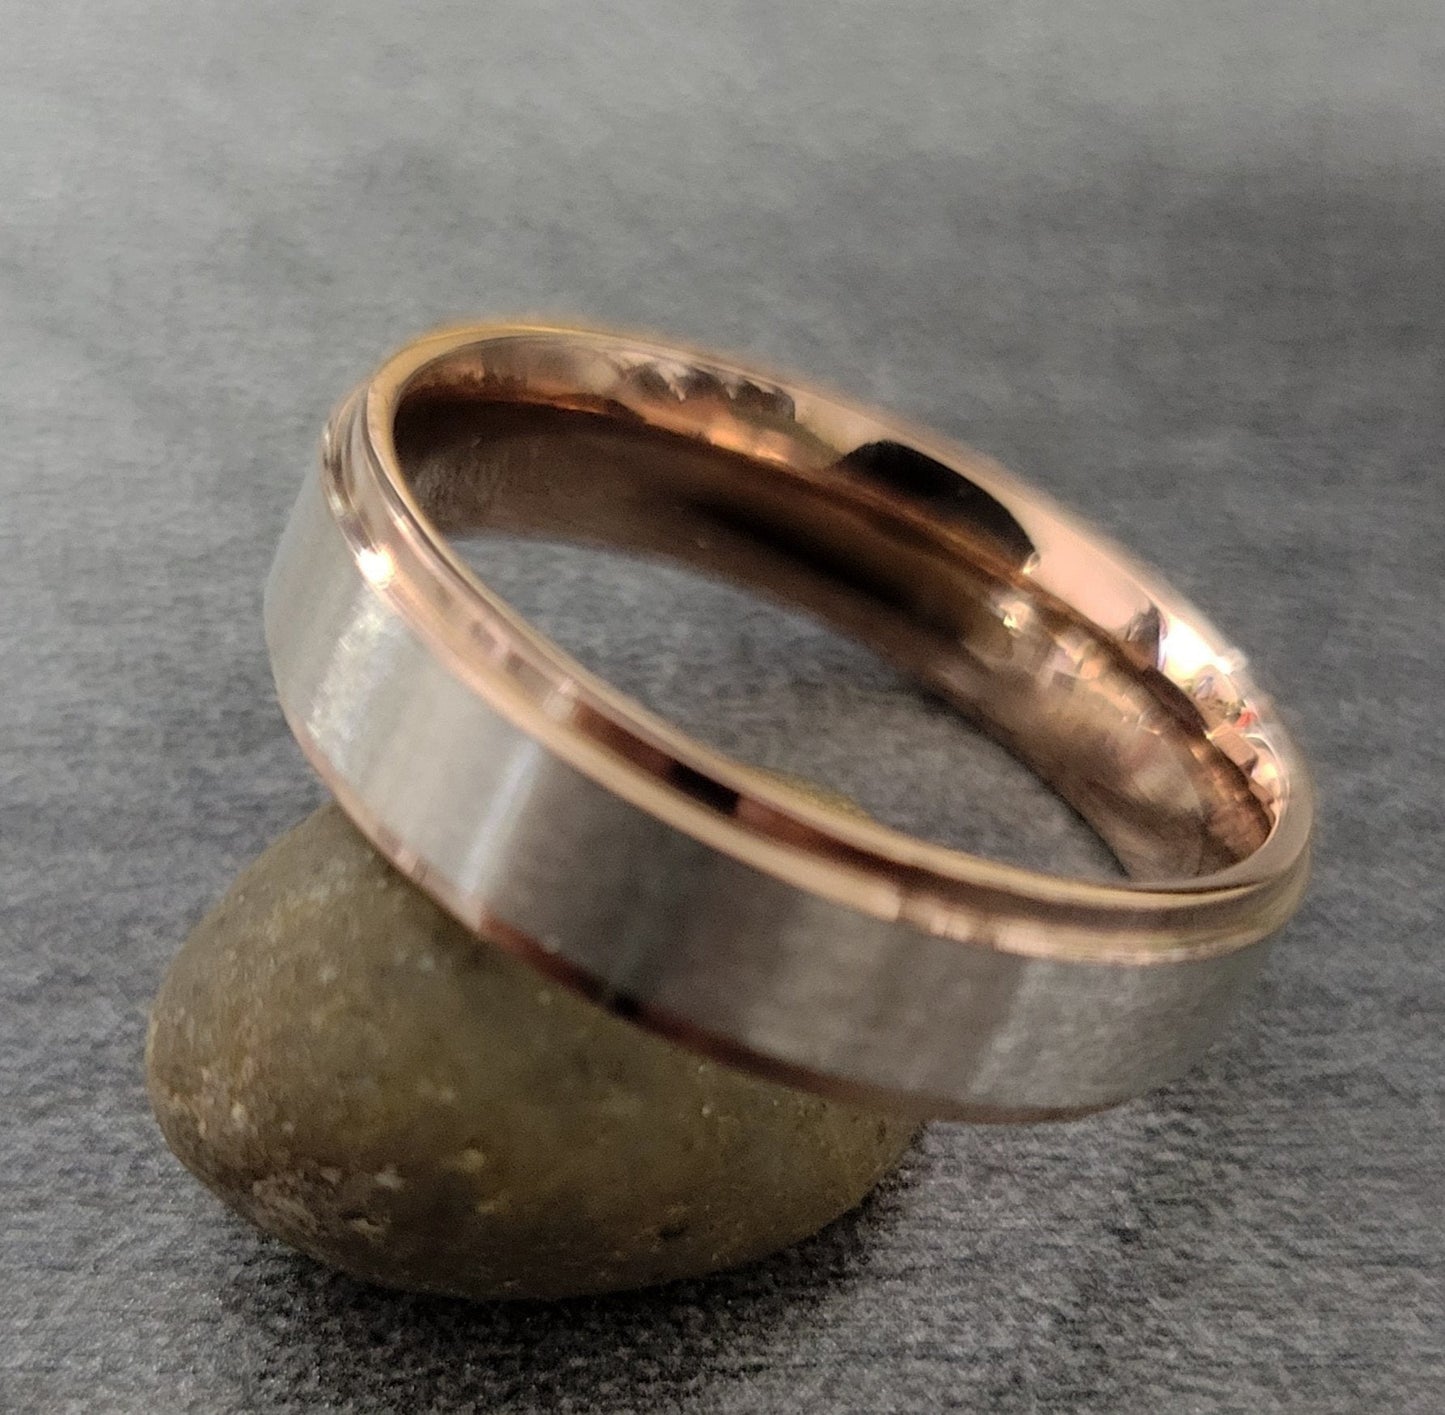 Think Engraved wedding Band Personalized Engraved Men's Rose Gold Wedding Ring - Engraved Handwriting Ring